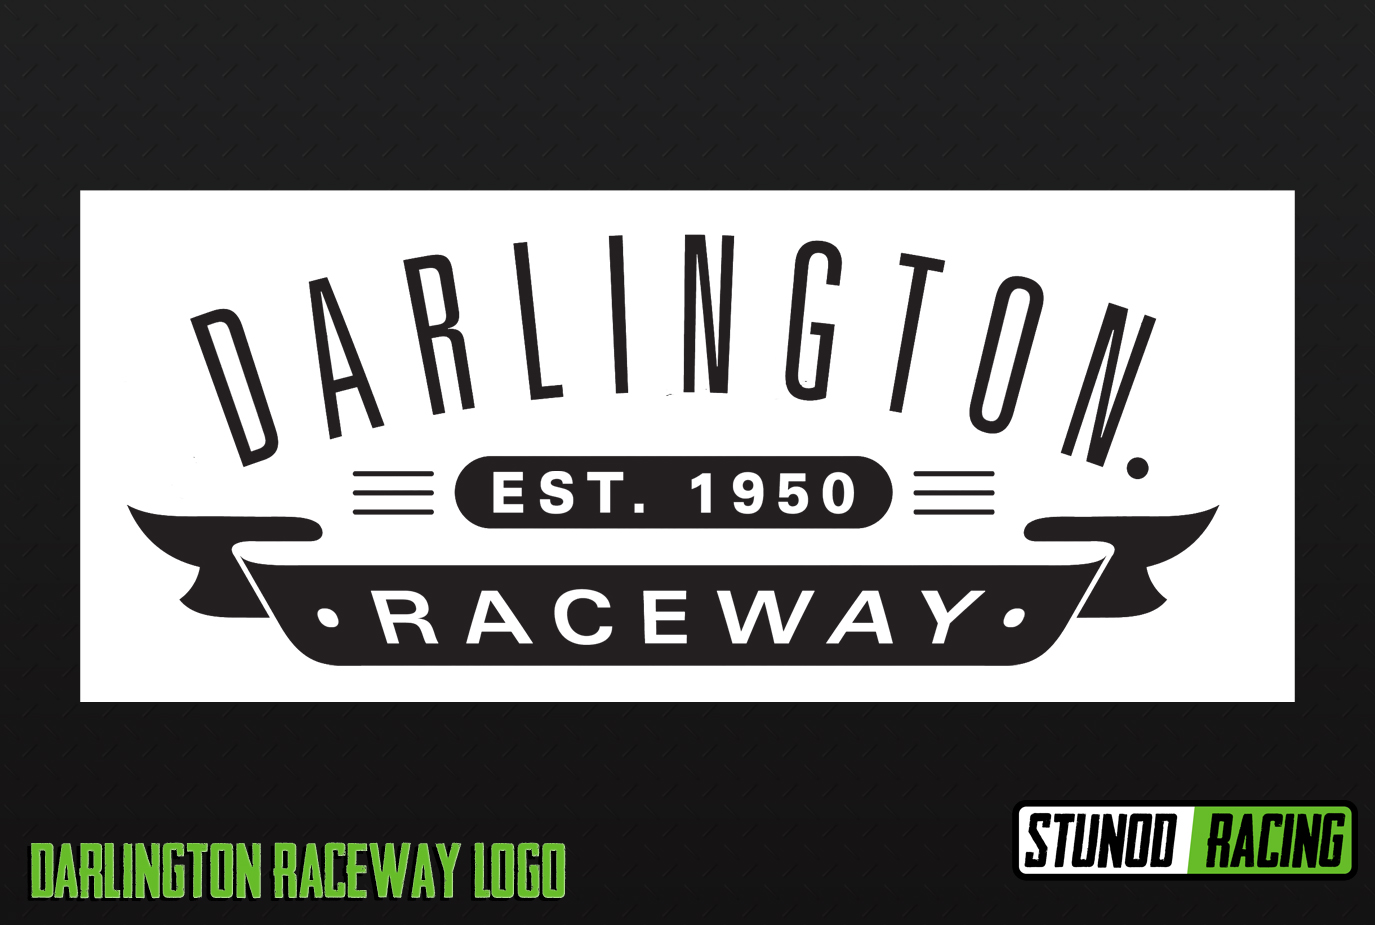 StunodRacing-DarlingtonRaceway-Logo.jpg